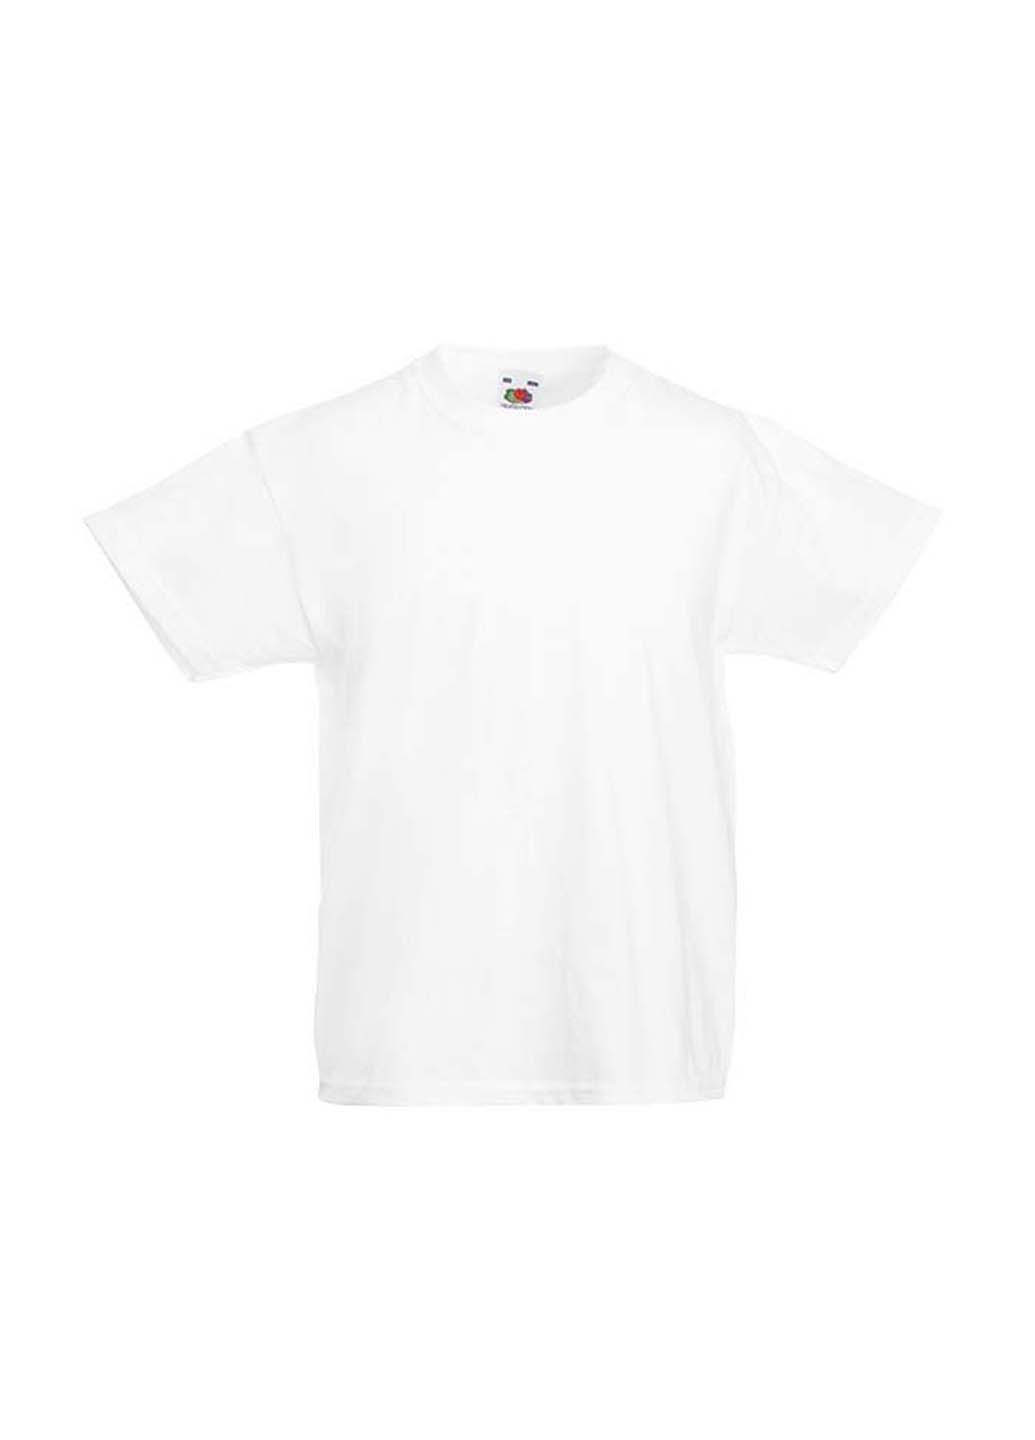 Біла демісезонна футболка Fruit of the Loom 61019030152